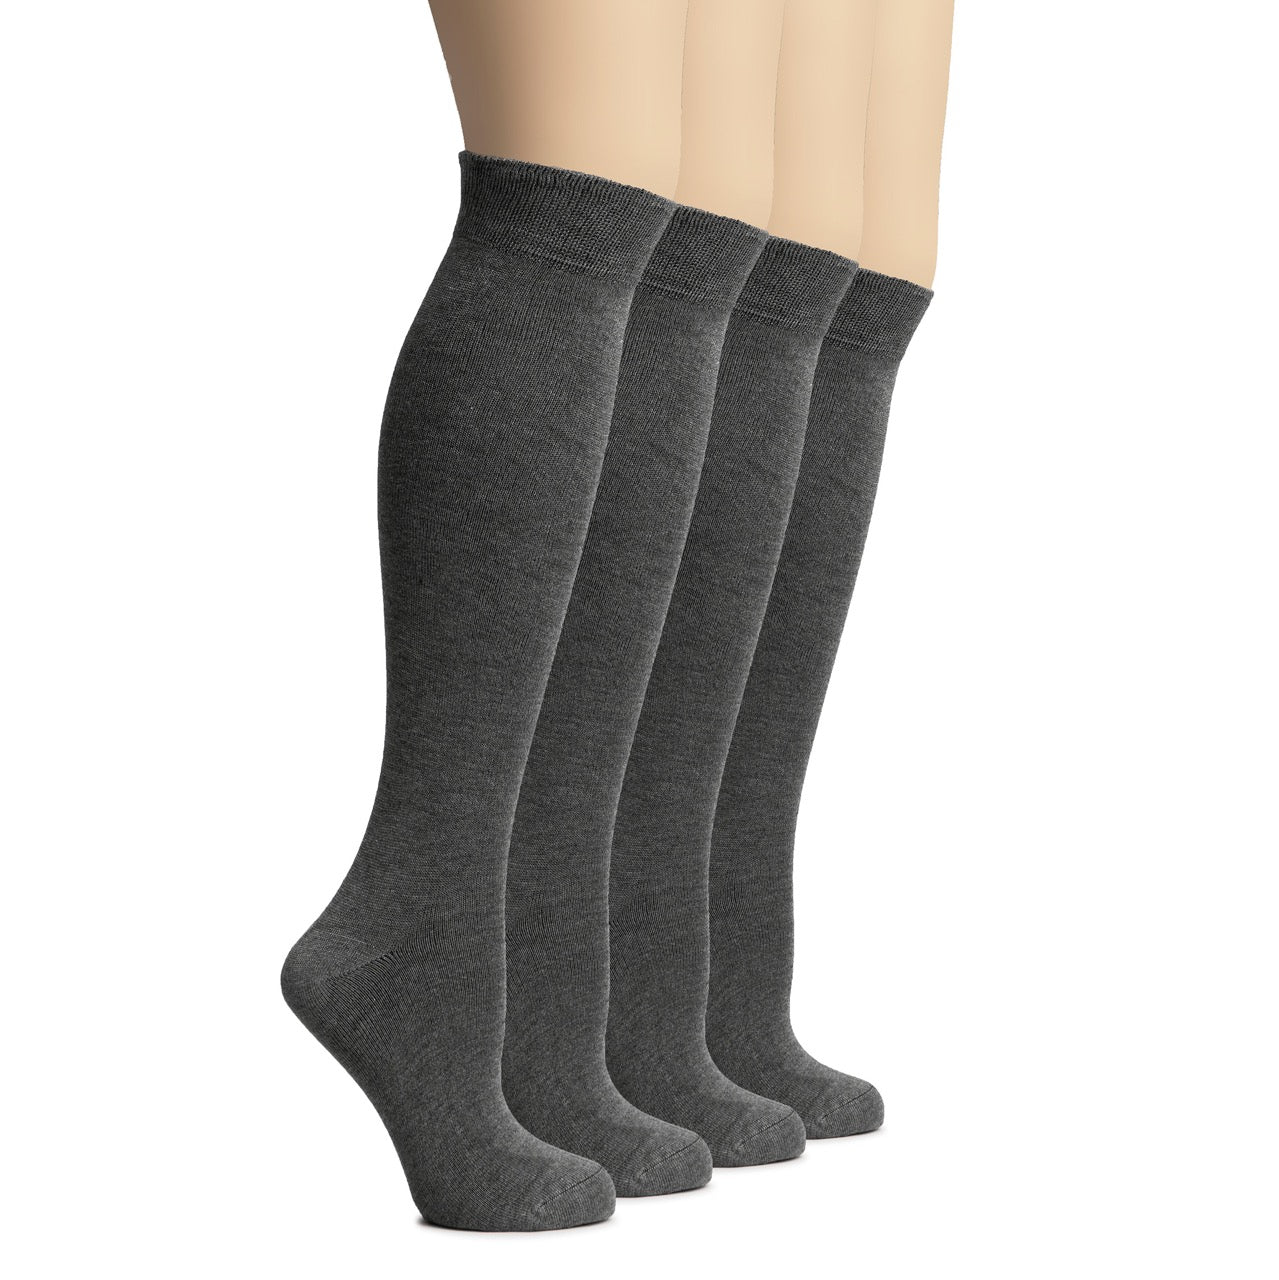 Goodfellow & Co Dress socks crew length multi colors 5 pairs warm  lightweight | eBay